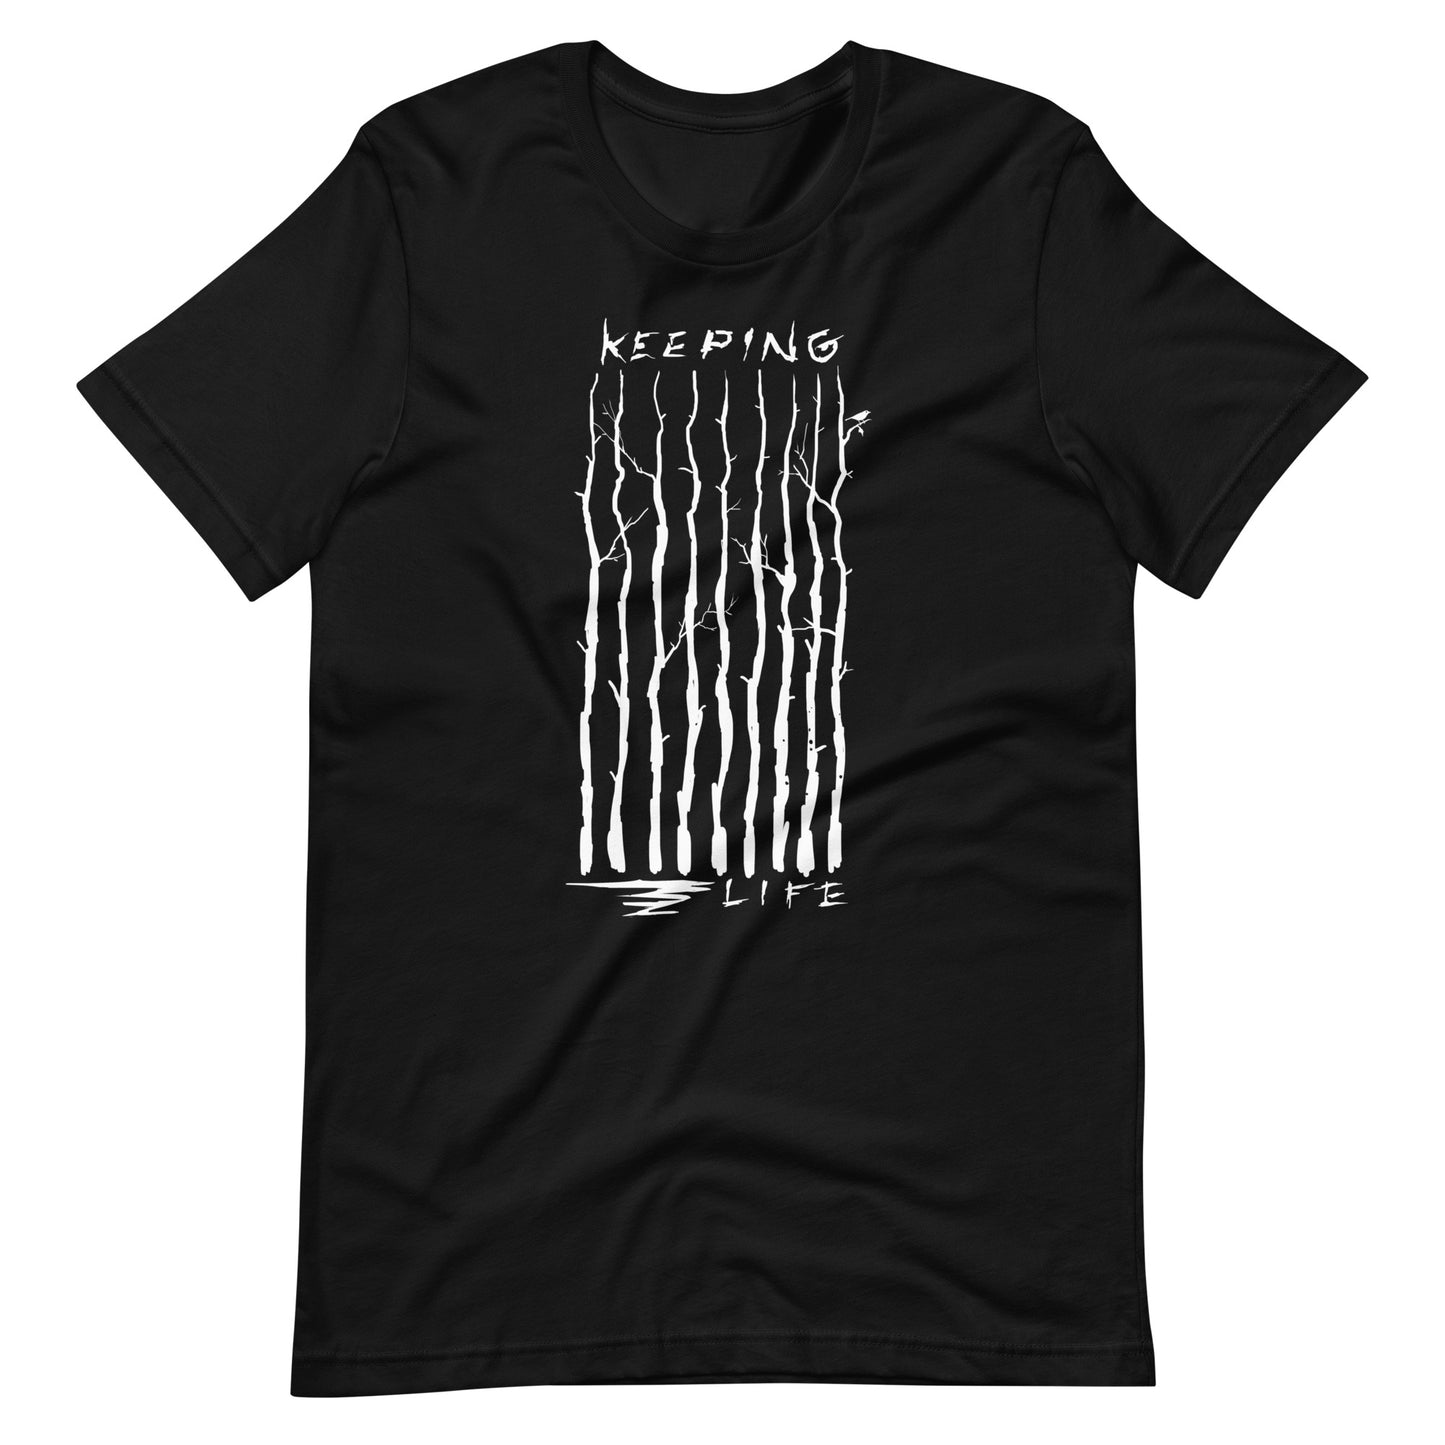 Keeping Lift - Men's t-shirt - Black Front